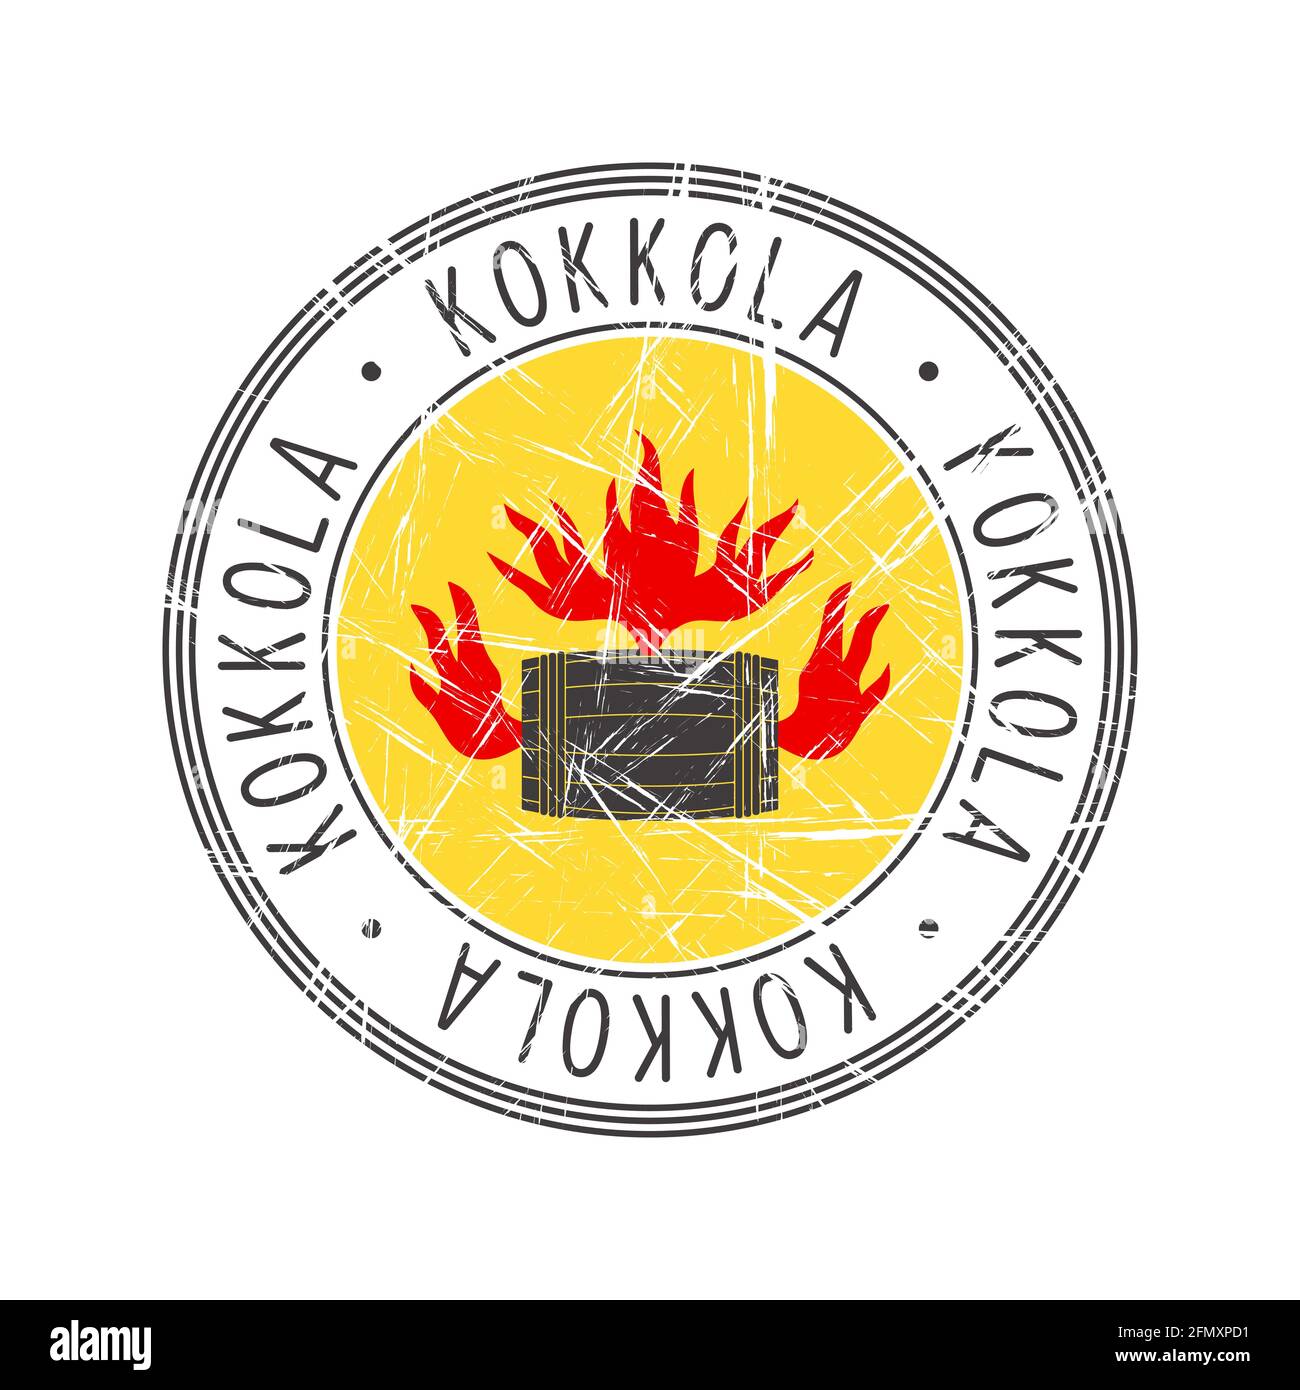 Kokkola city, Finland. Grunge postal rubber stamp over white background Stock Vector